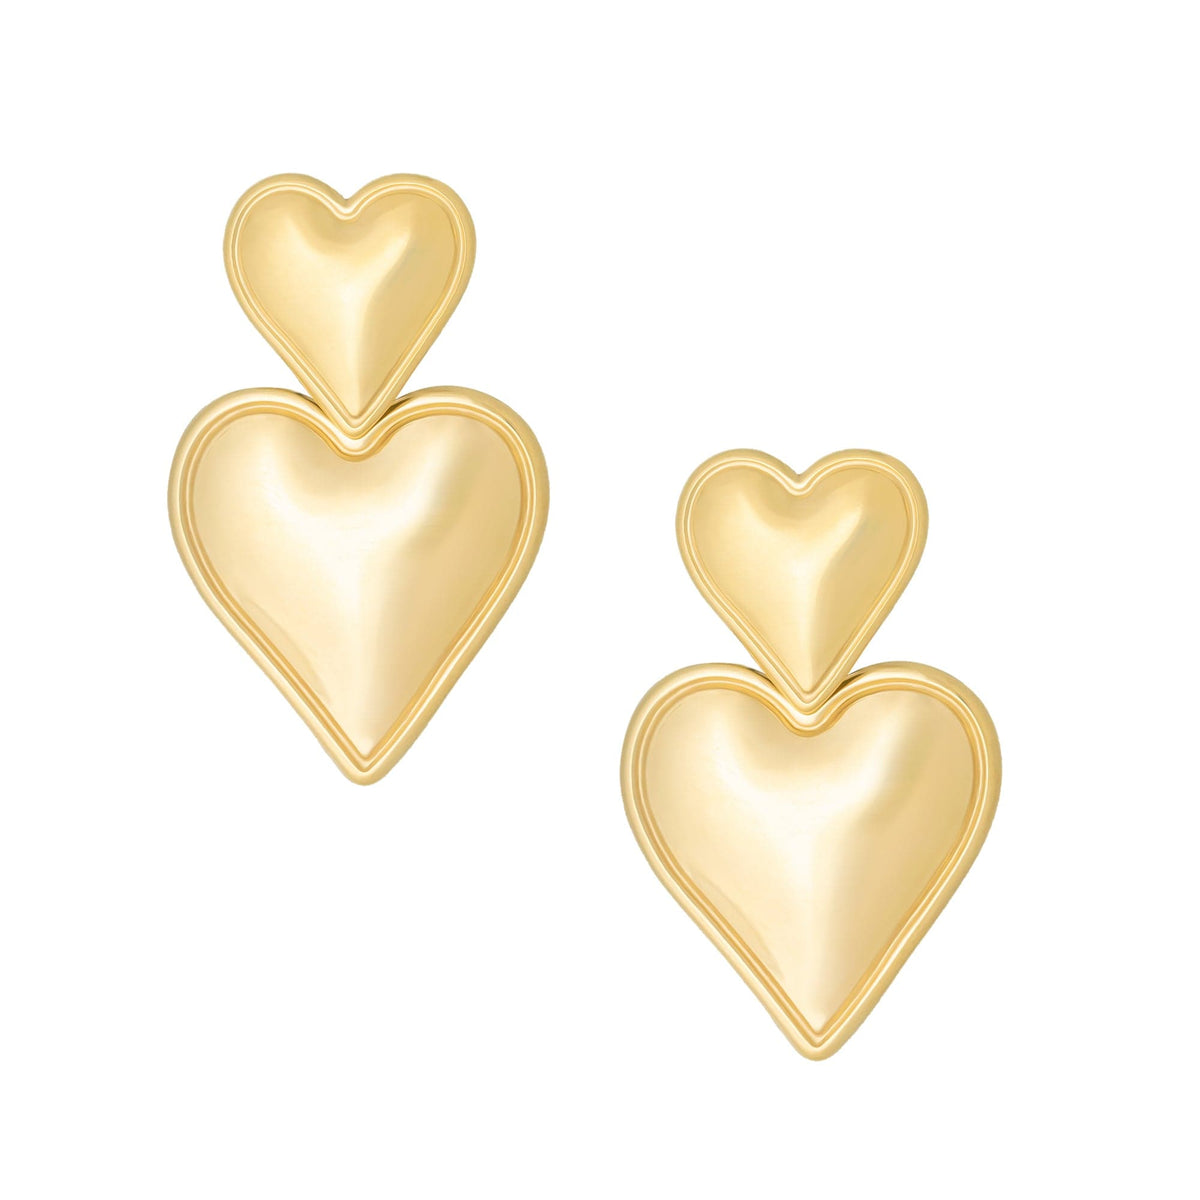 BohoMoon Stainless Steel Fairytale Stud Earrings Gold